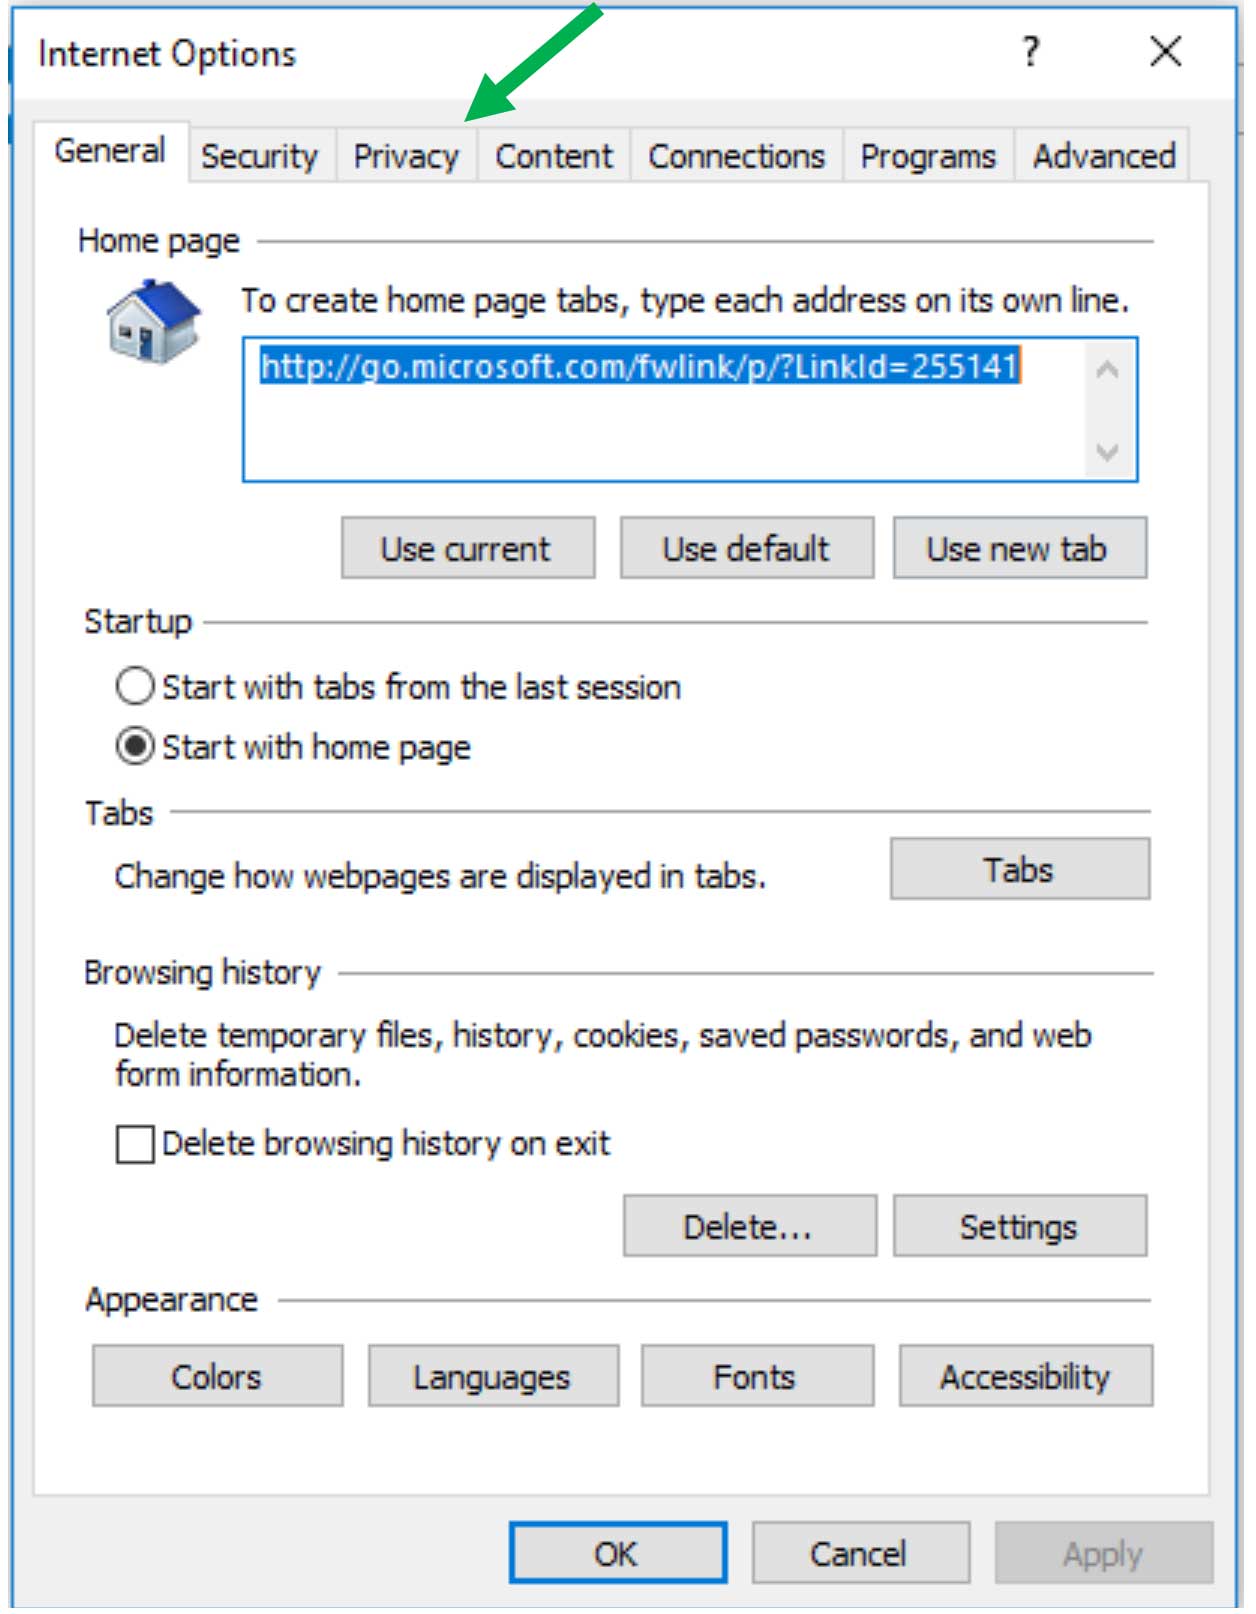 Internet Explorer Internet Options screen